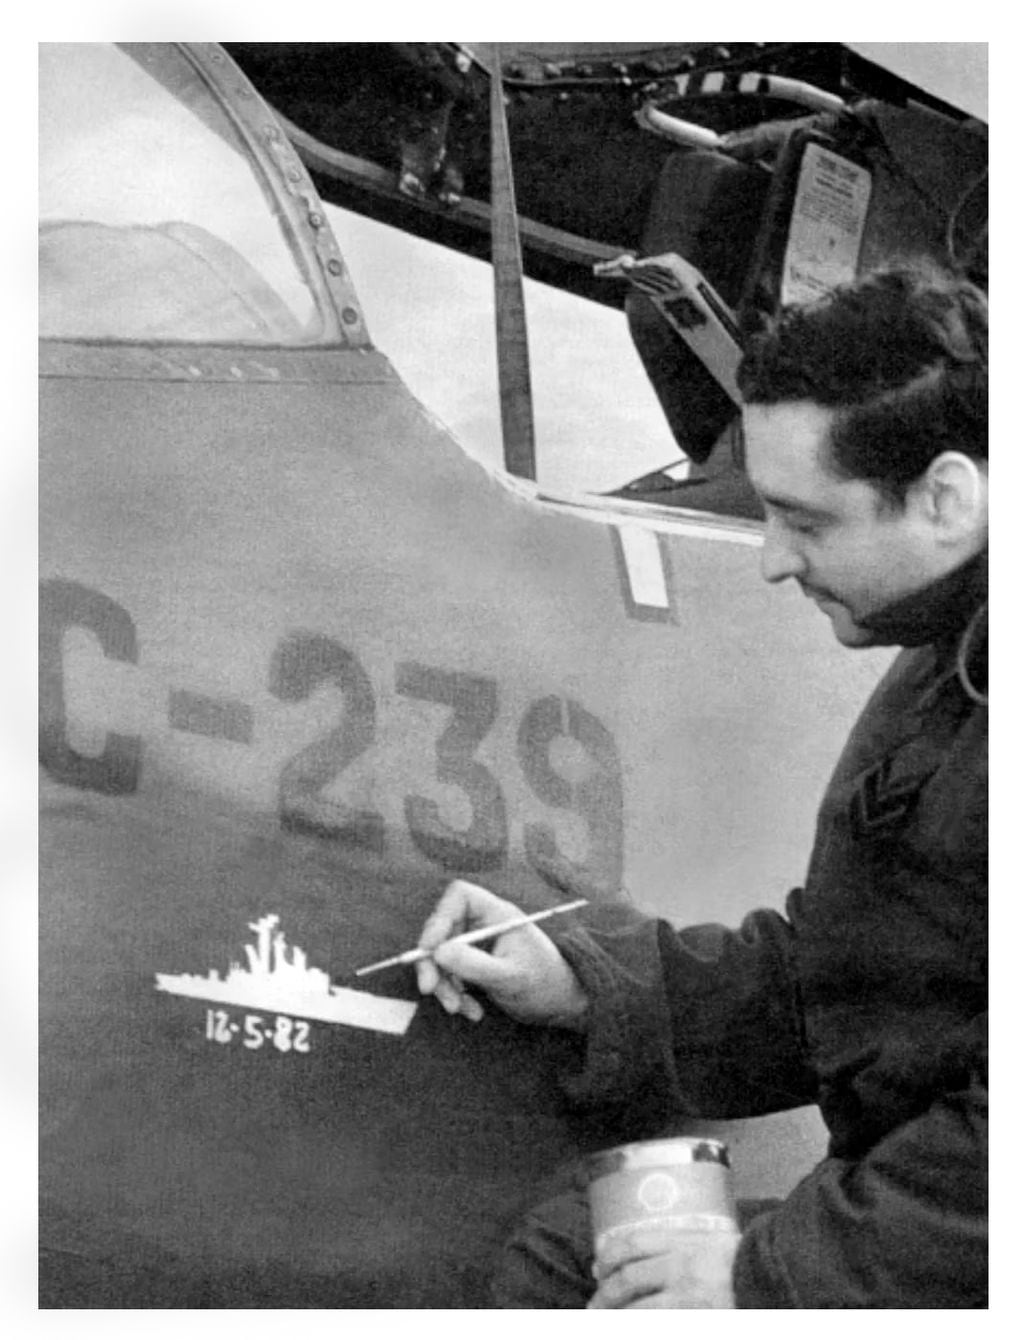 Foto tomada el 13 de mayo de 1982, se observa al suboficial Córdoba pintando la silueta del buque. Foto Fuerza Aérea Argentina

